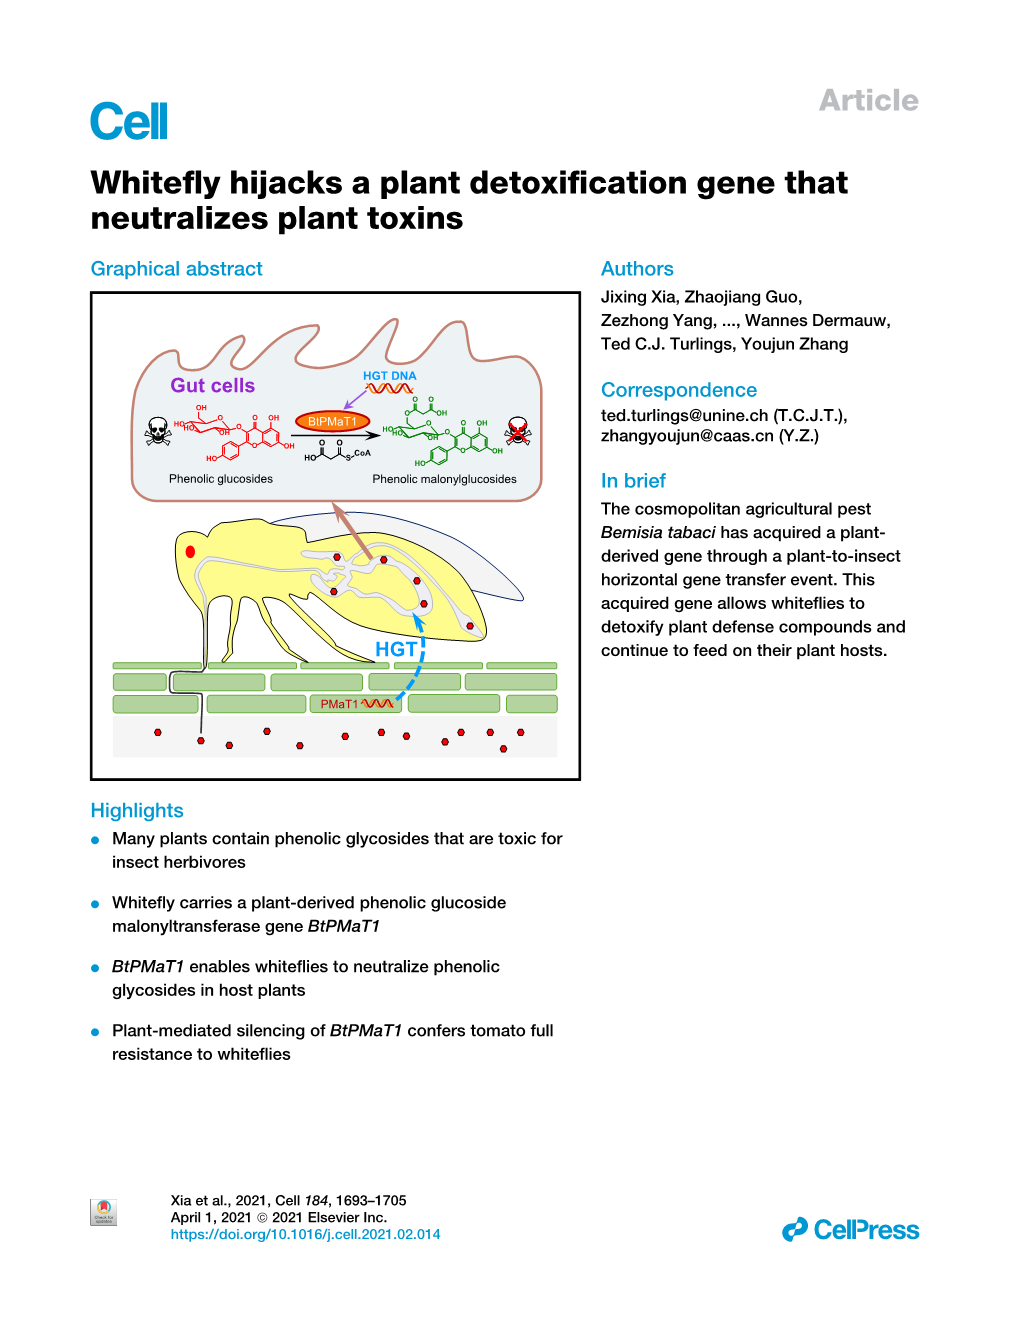 Whitefly Hijacks a Plant Detoxification Gene That Neutralizes Plant Toxins